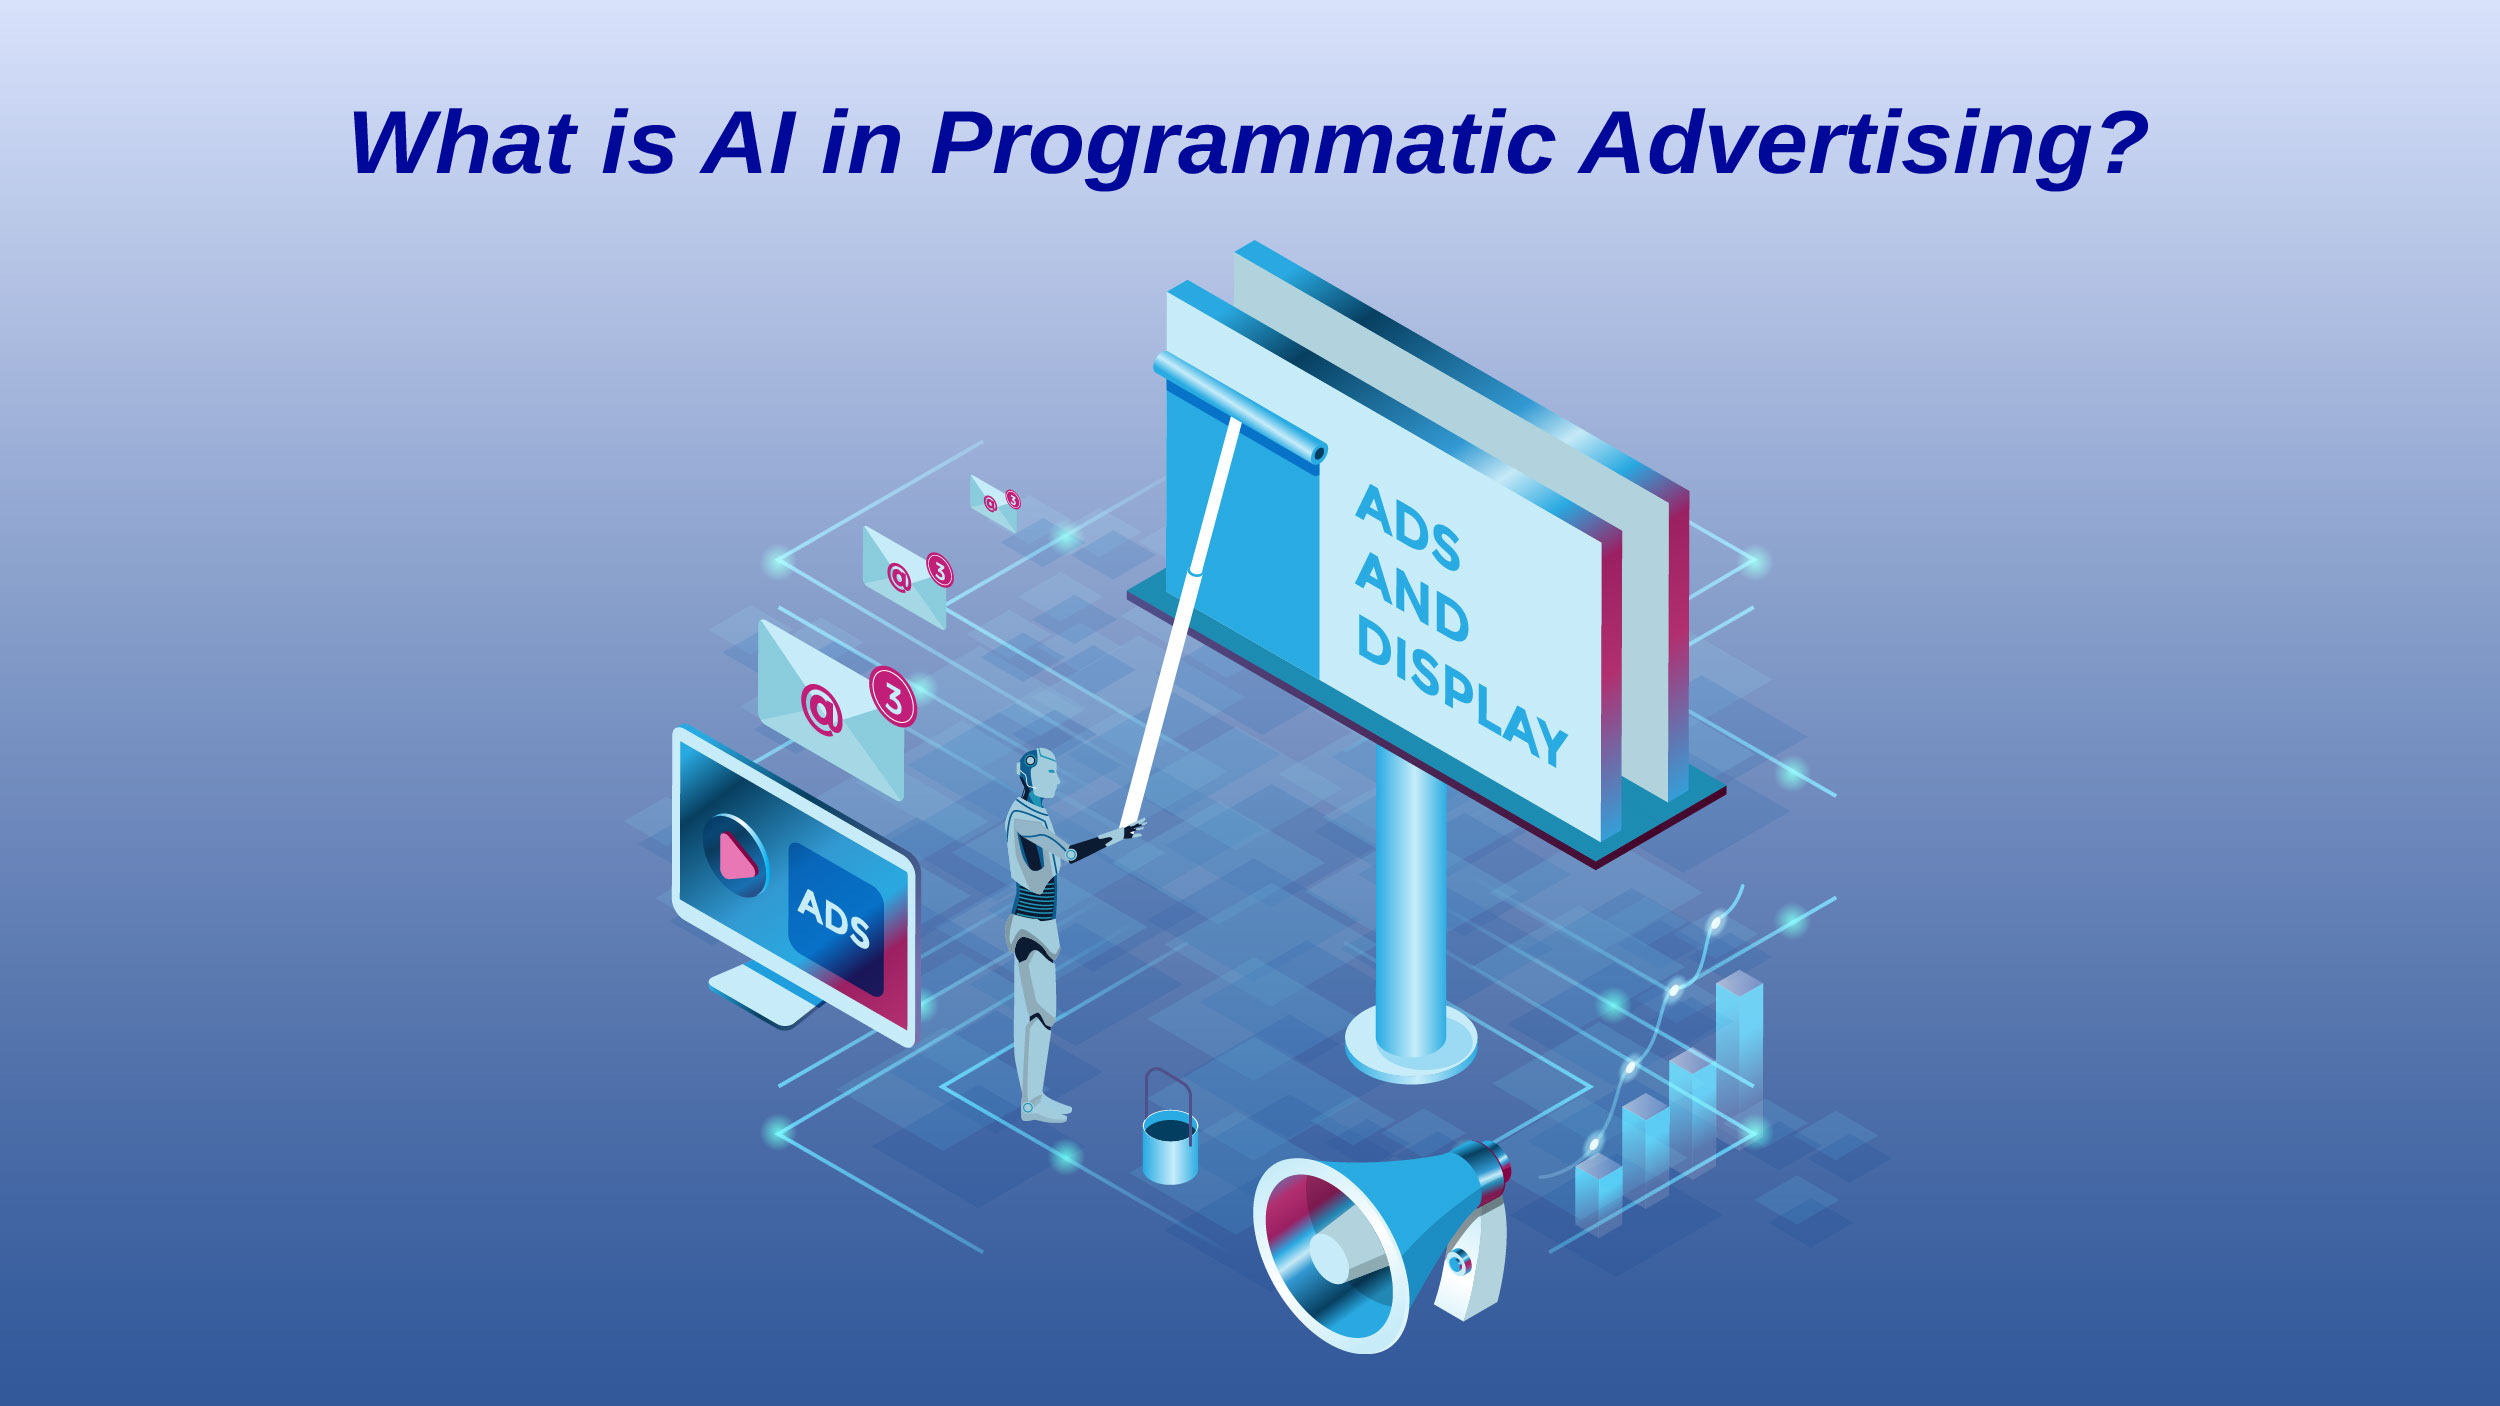 AI in Programmatic Advertising